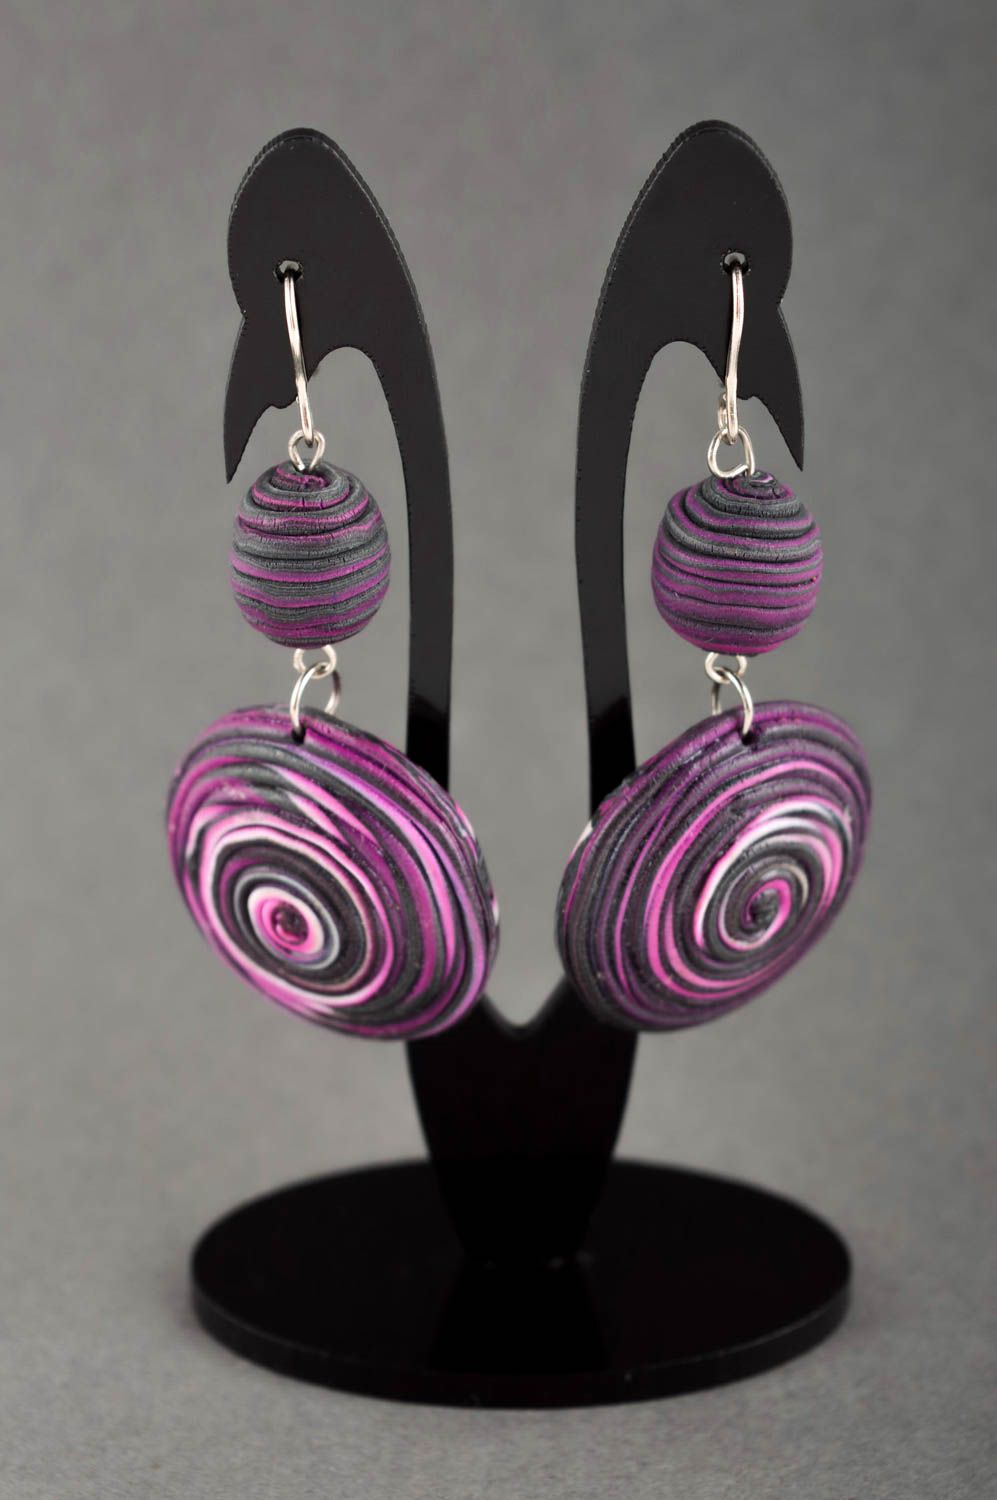 Stylish handmade plastic earrings beautiful jewellery polymer clay ideas photo 1